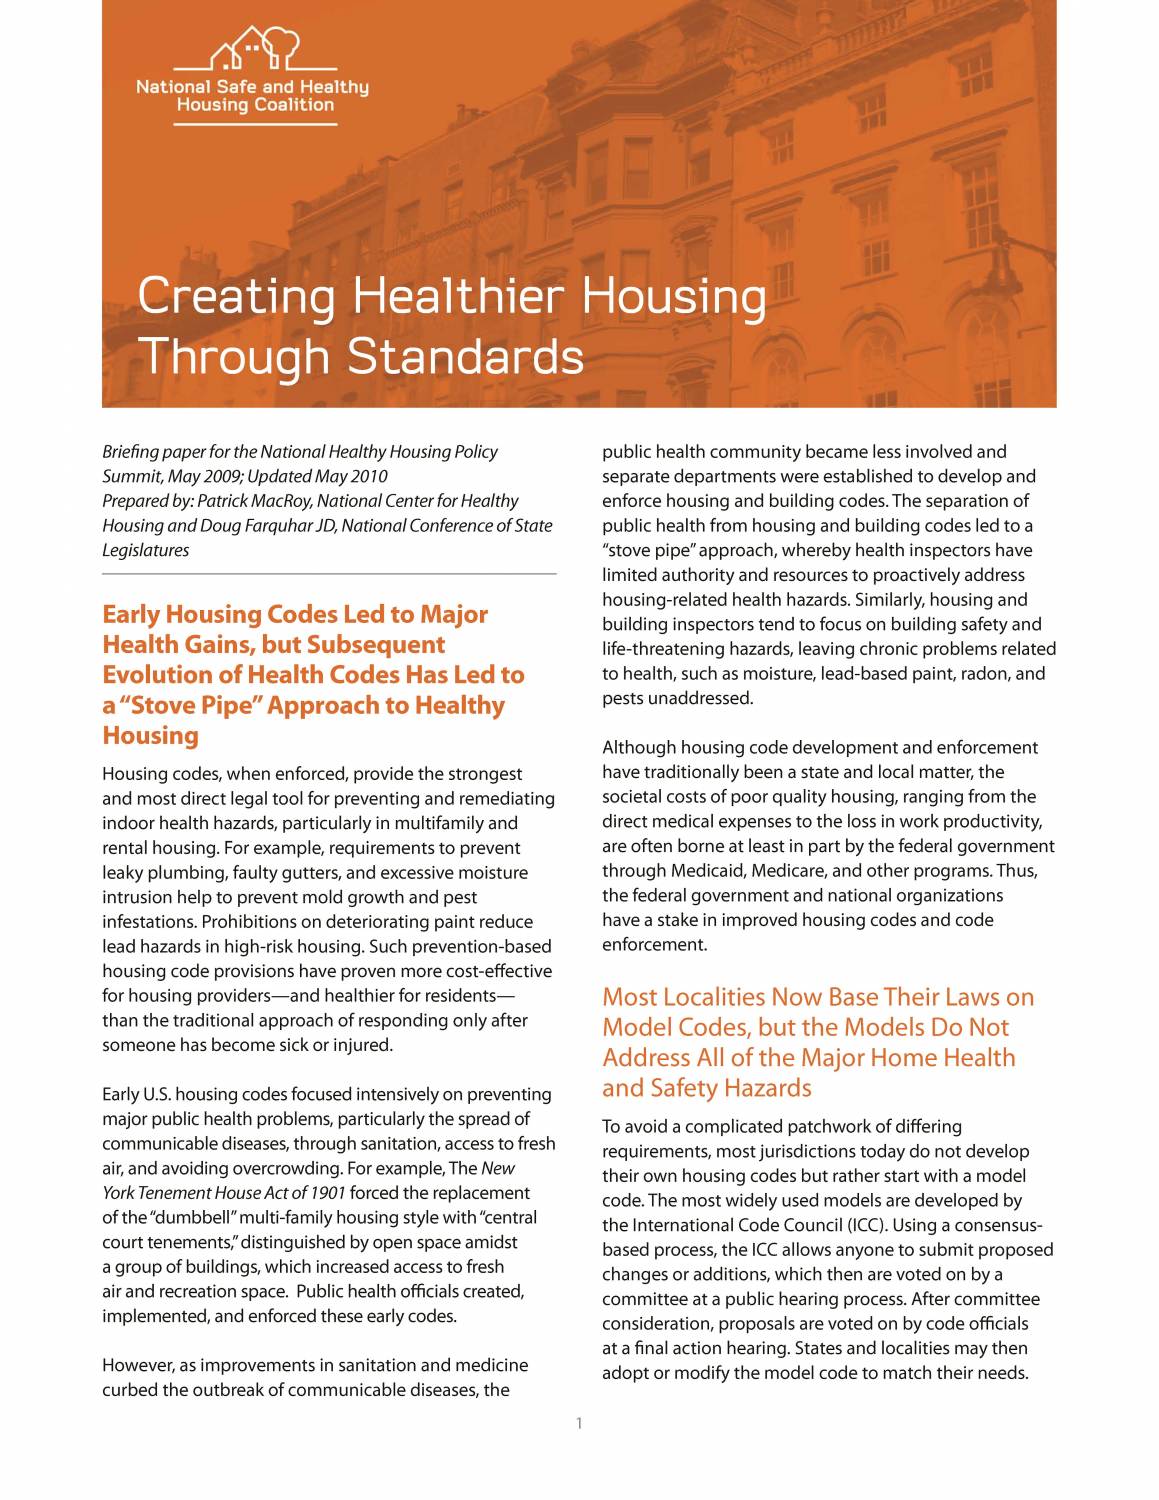 Creating Healthier Housing through Standards